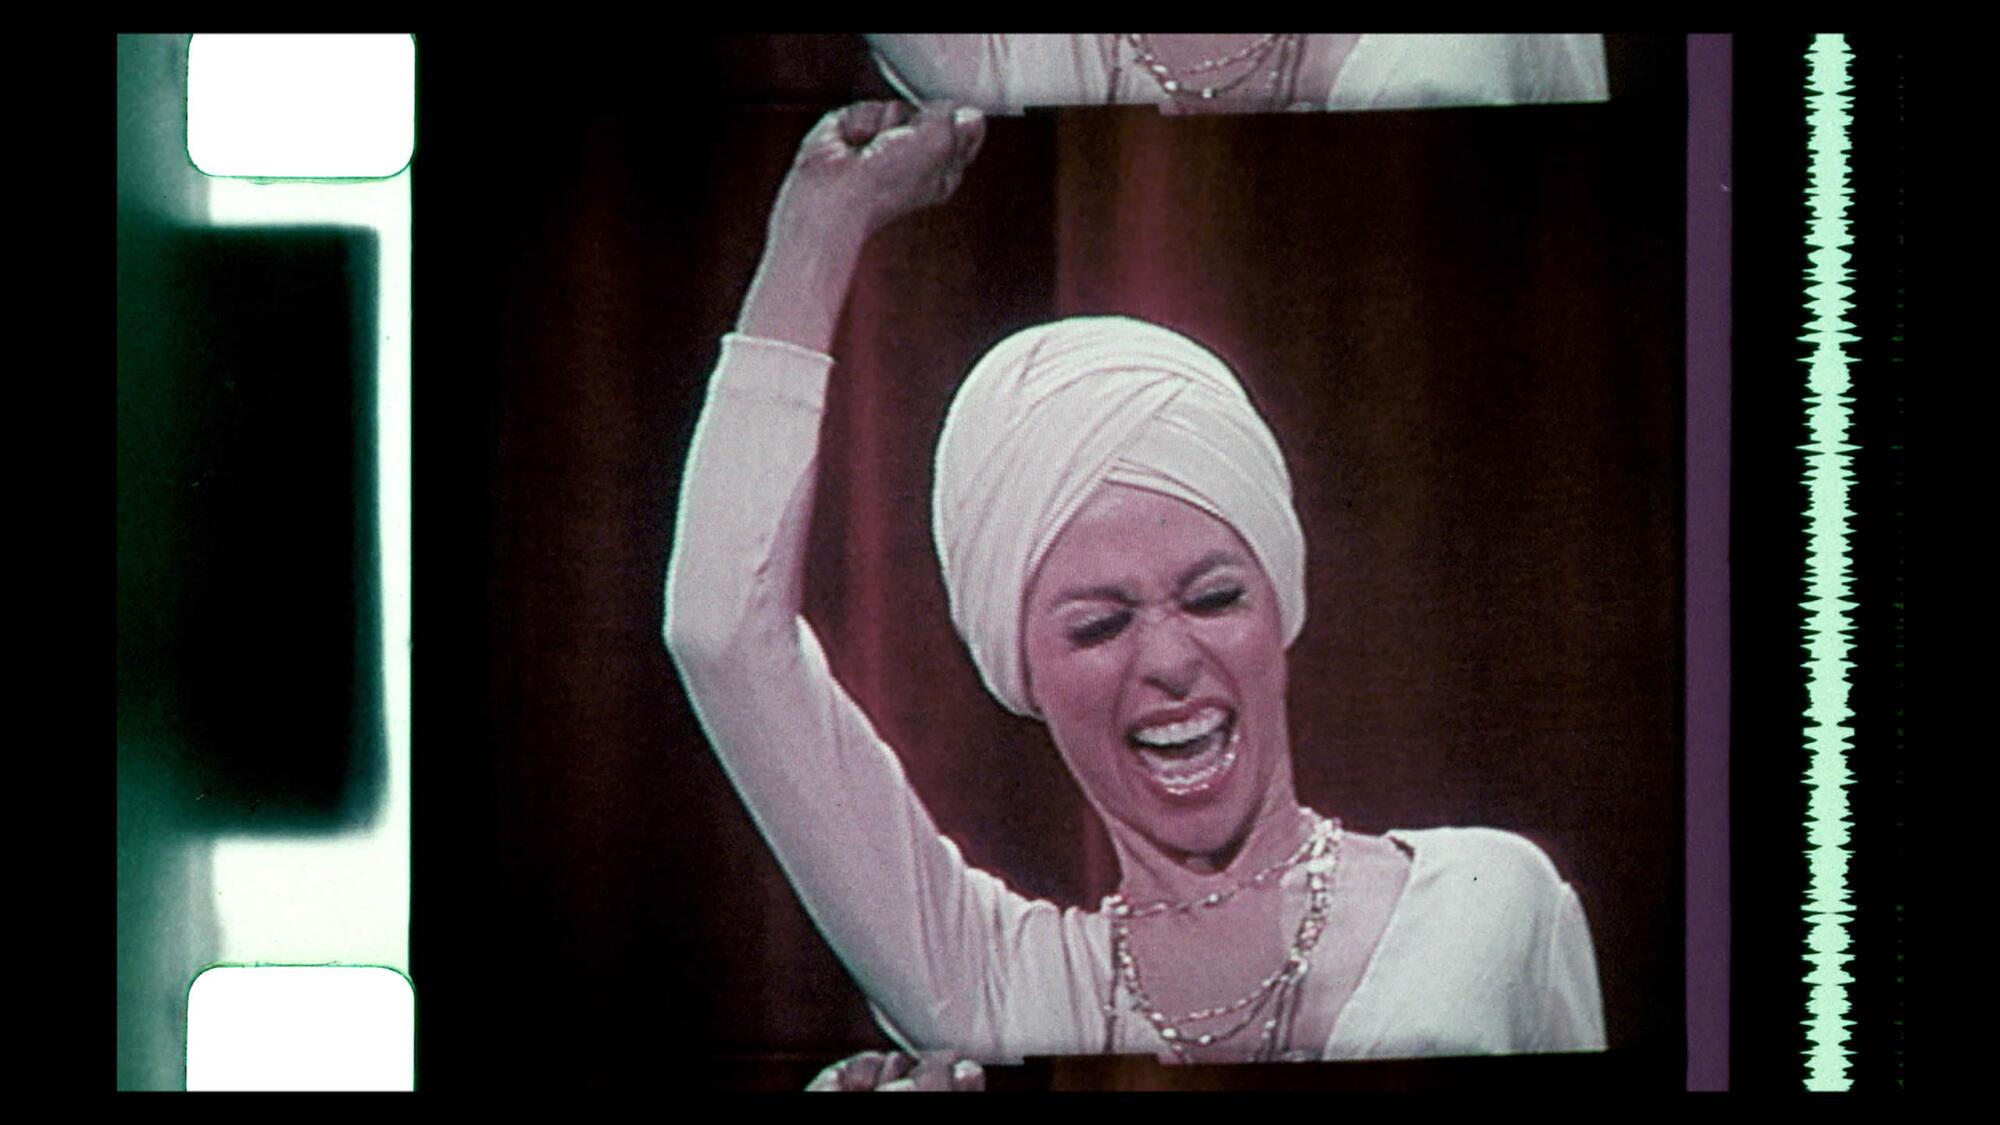 Rita Moreno accepting a Tony Award in 1975 for "The Ritz."